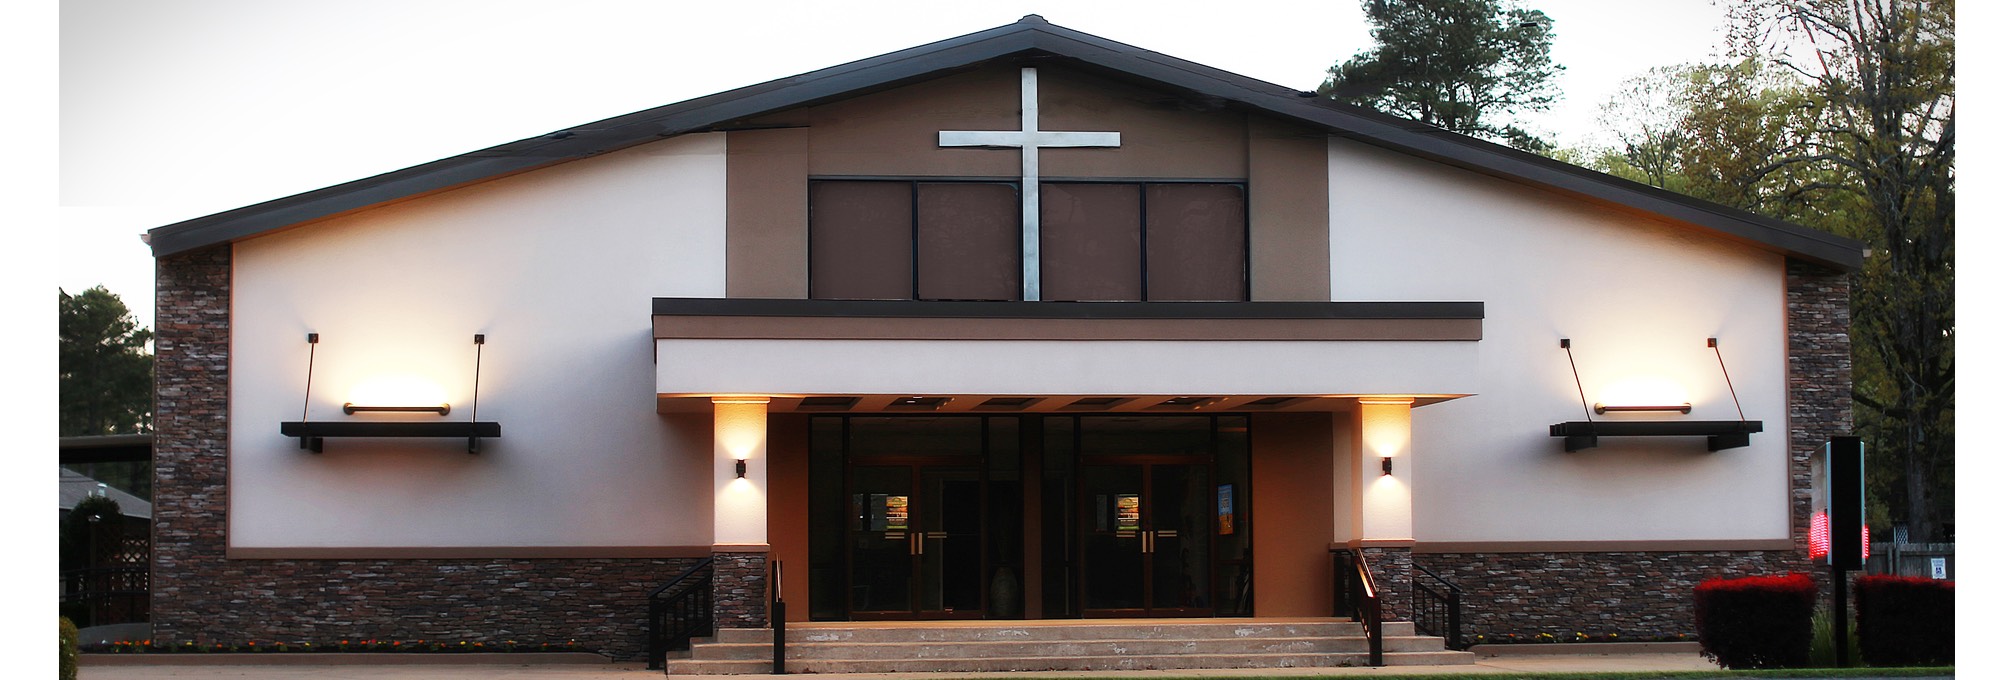 Rowland Road Baptist Church - Monroe, LA